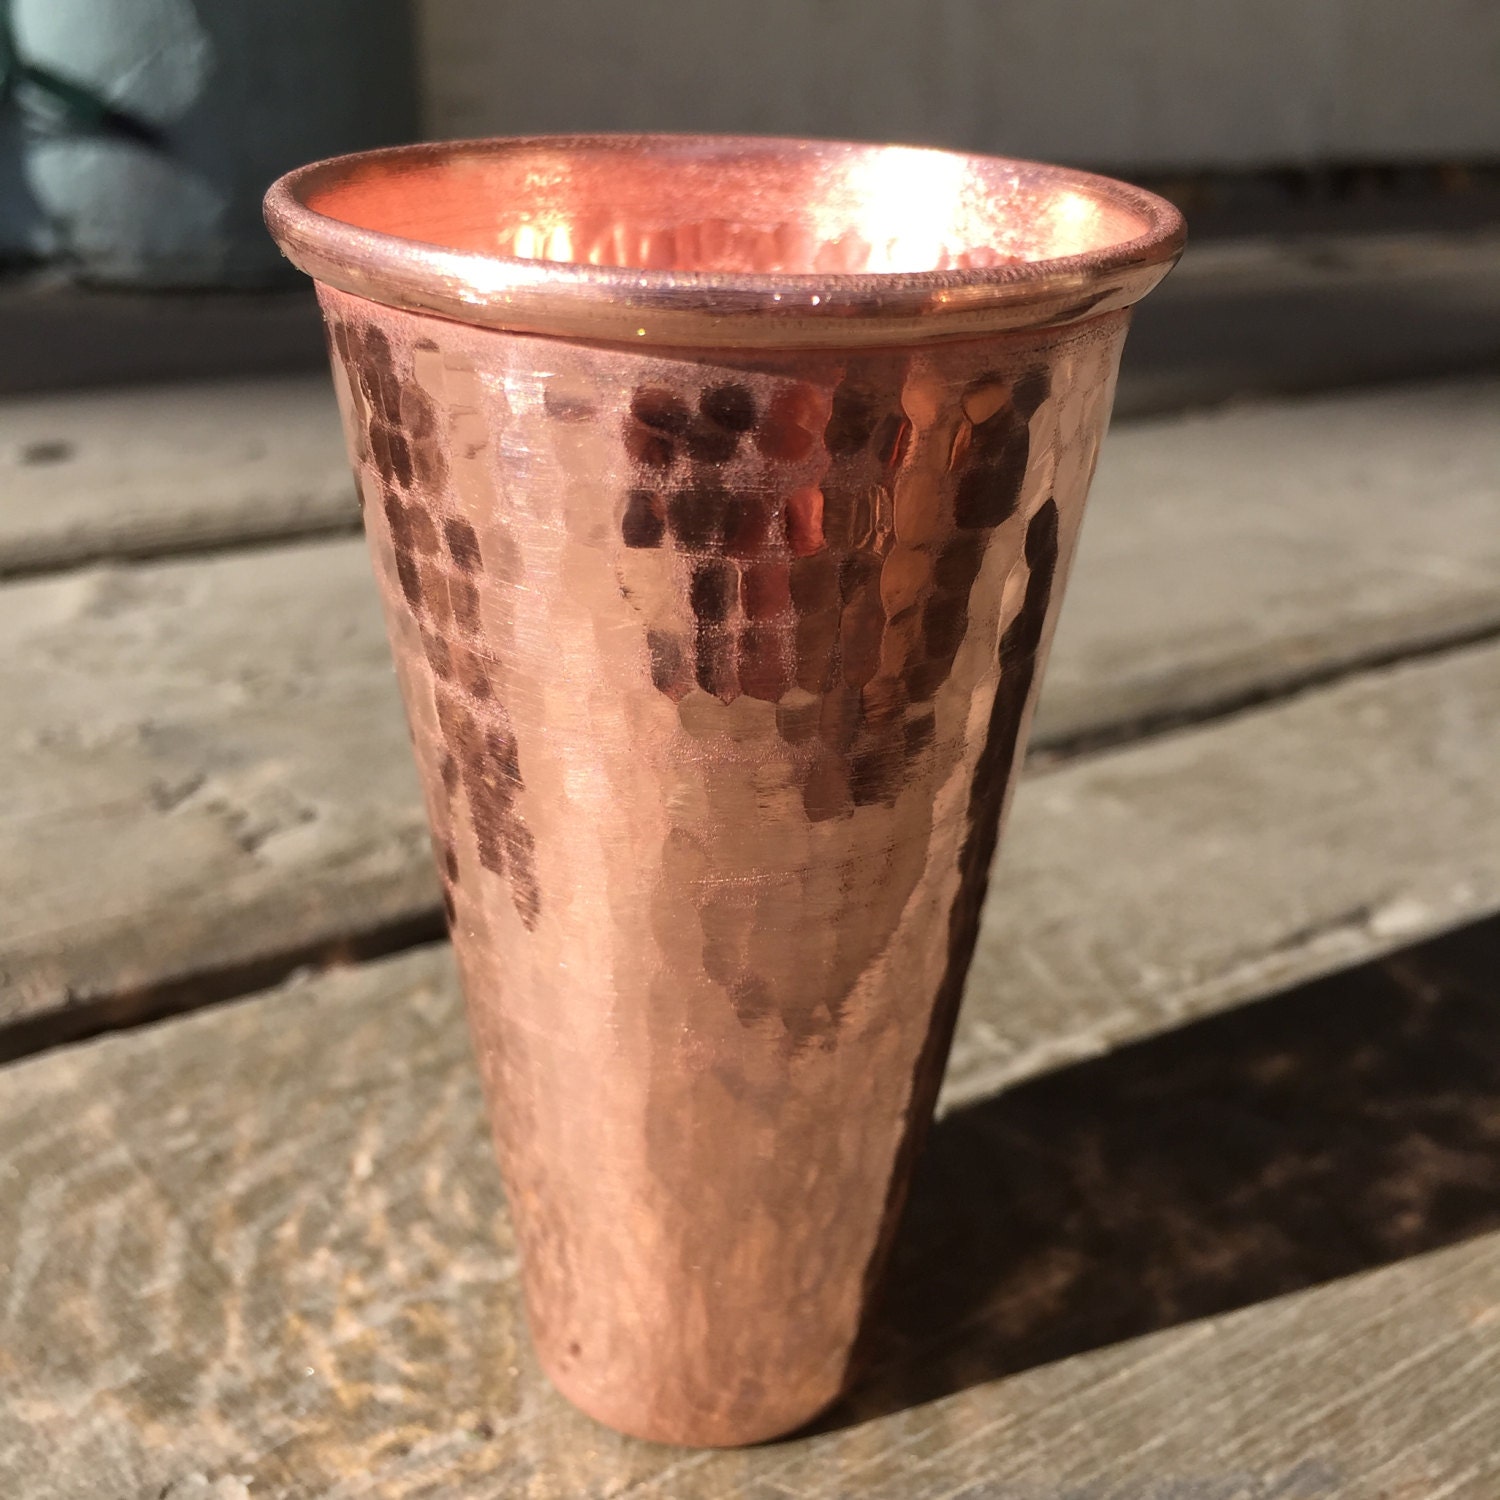 3oz pure hammered copper shot glass